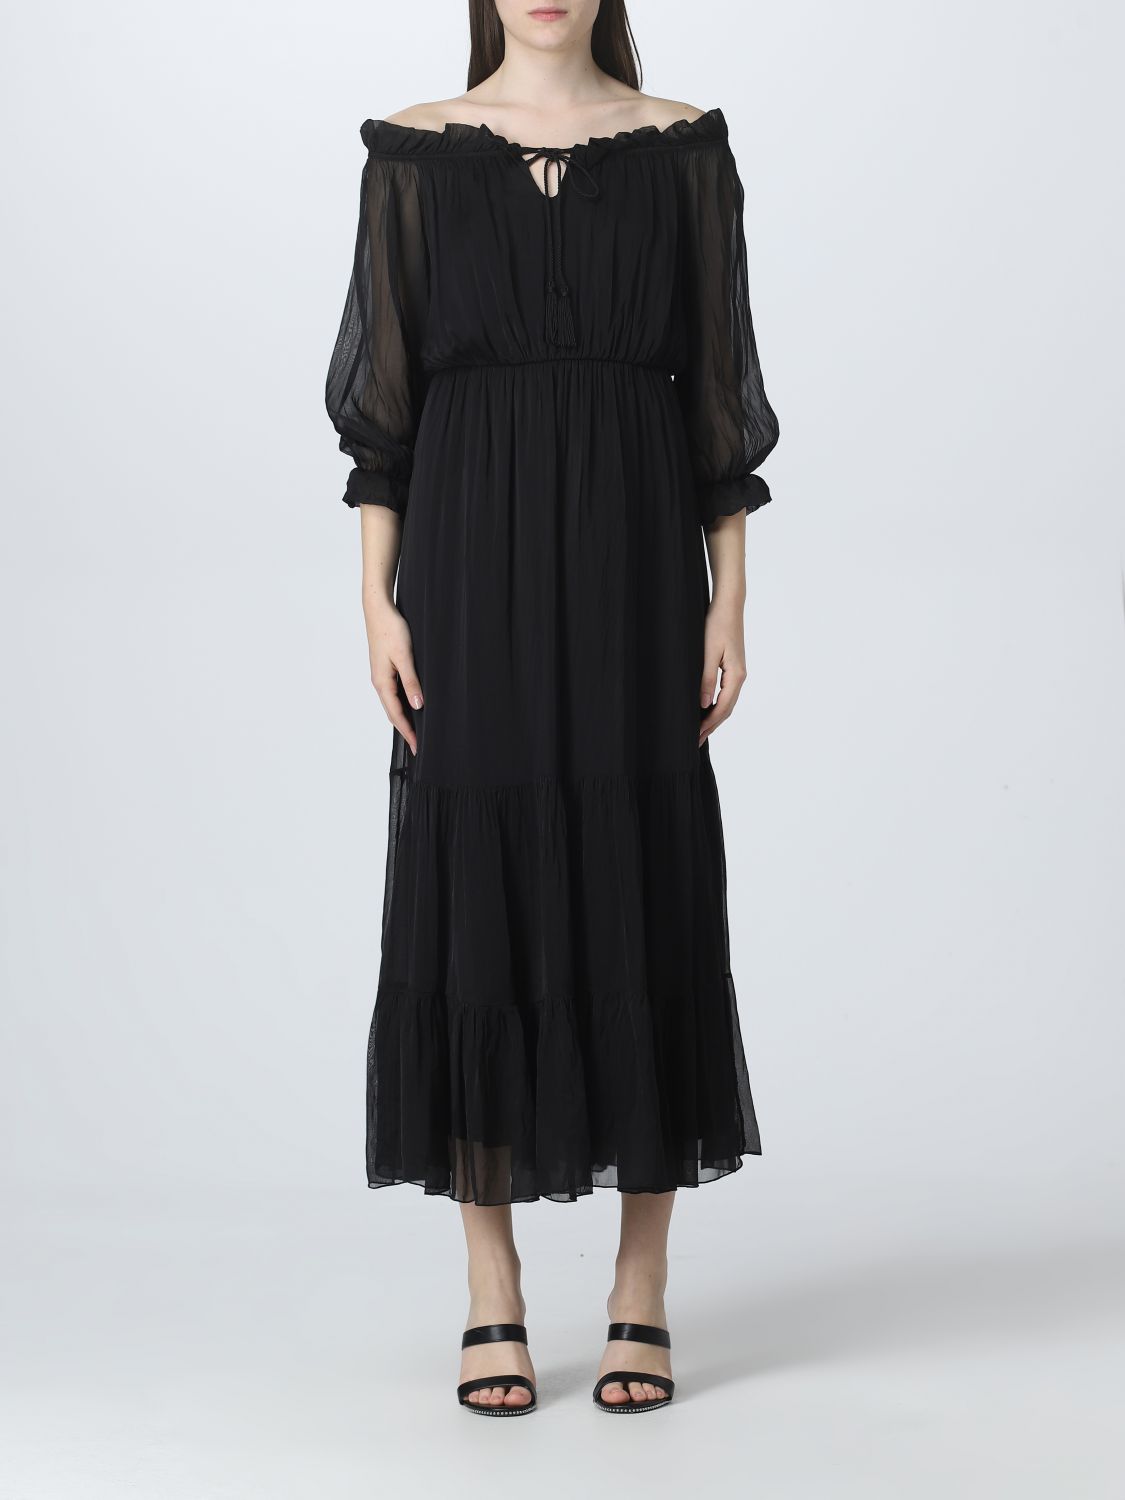 KAOS: dress for woman - Black | Kaos dress PPJCF010 online on GIGLIO.COM